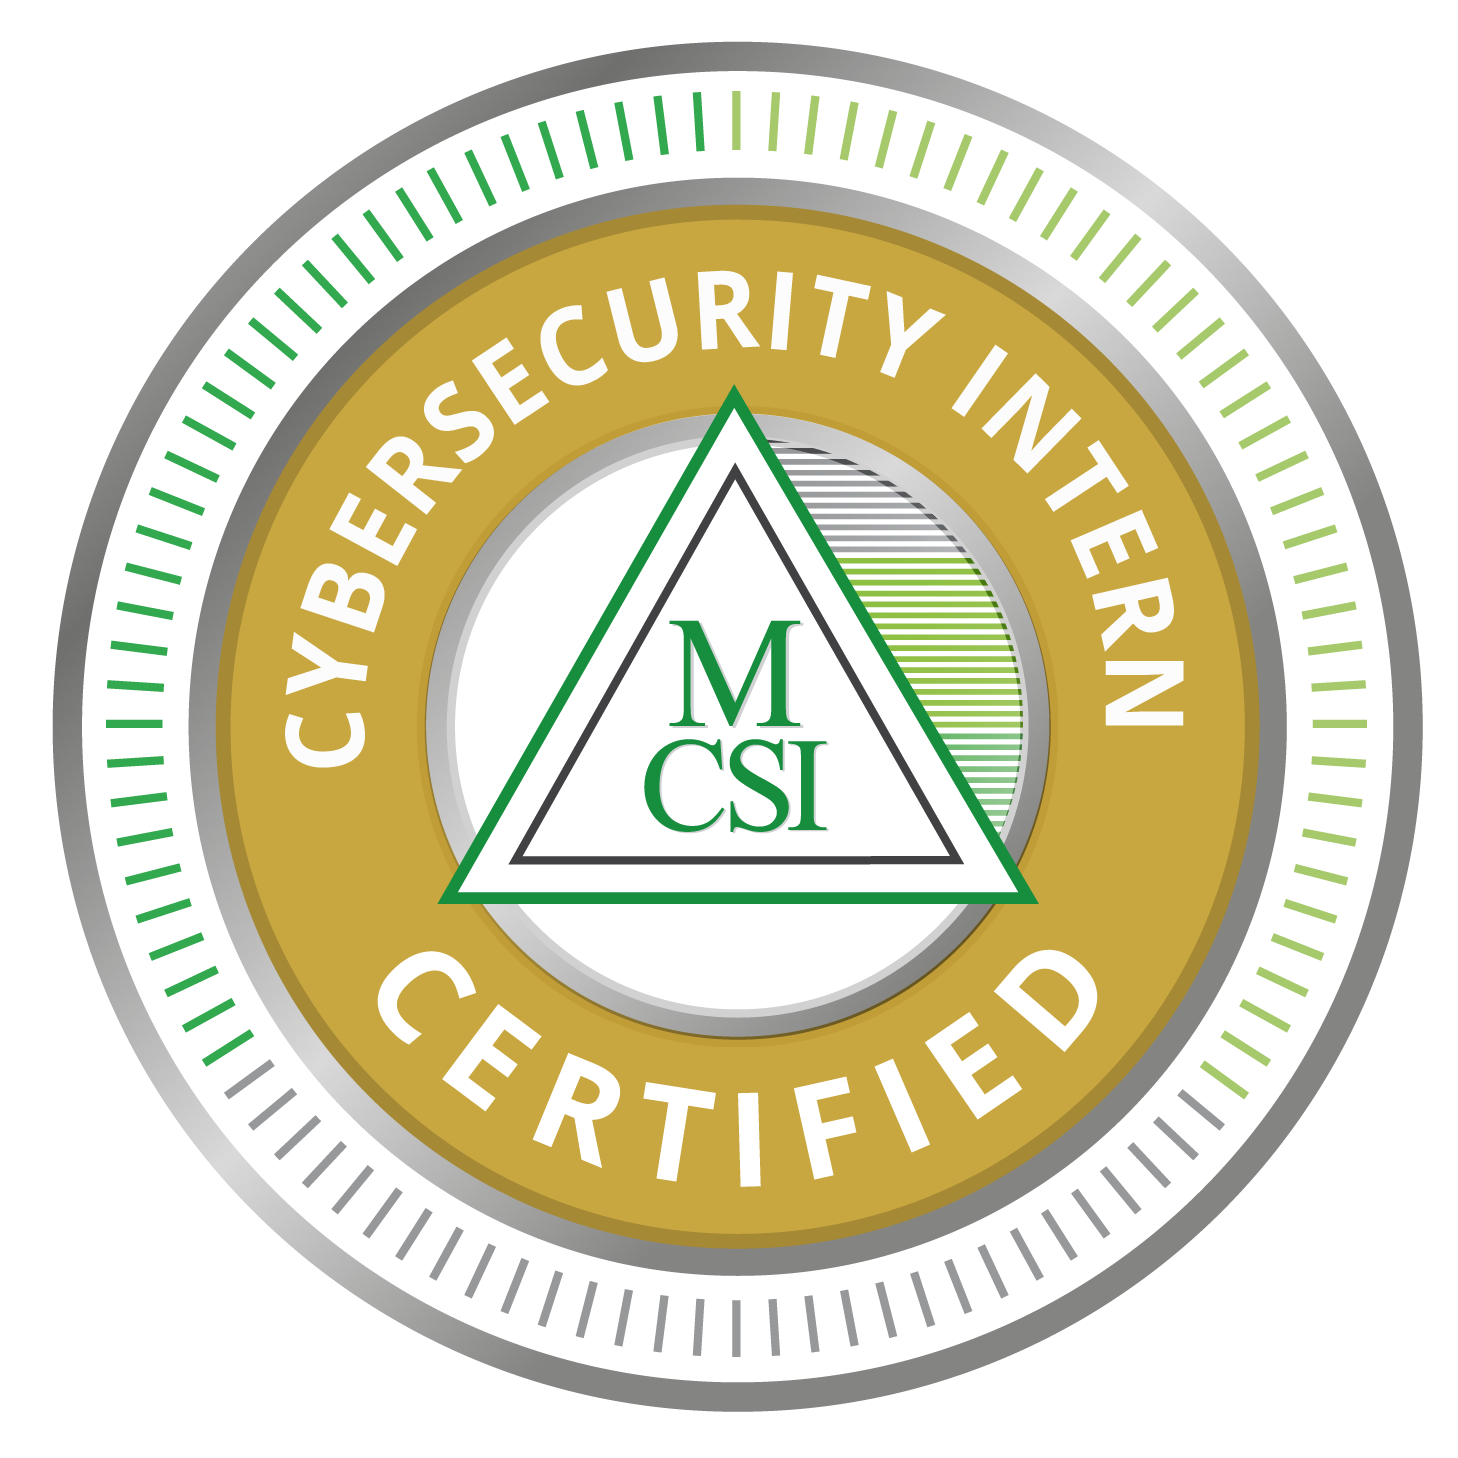 MRCI Remote Cybersecurity Internship MCSI Cyber Security Certifications